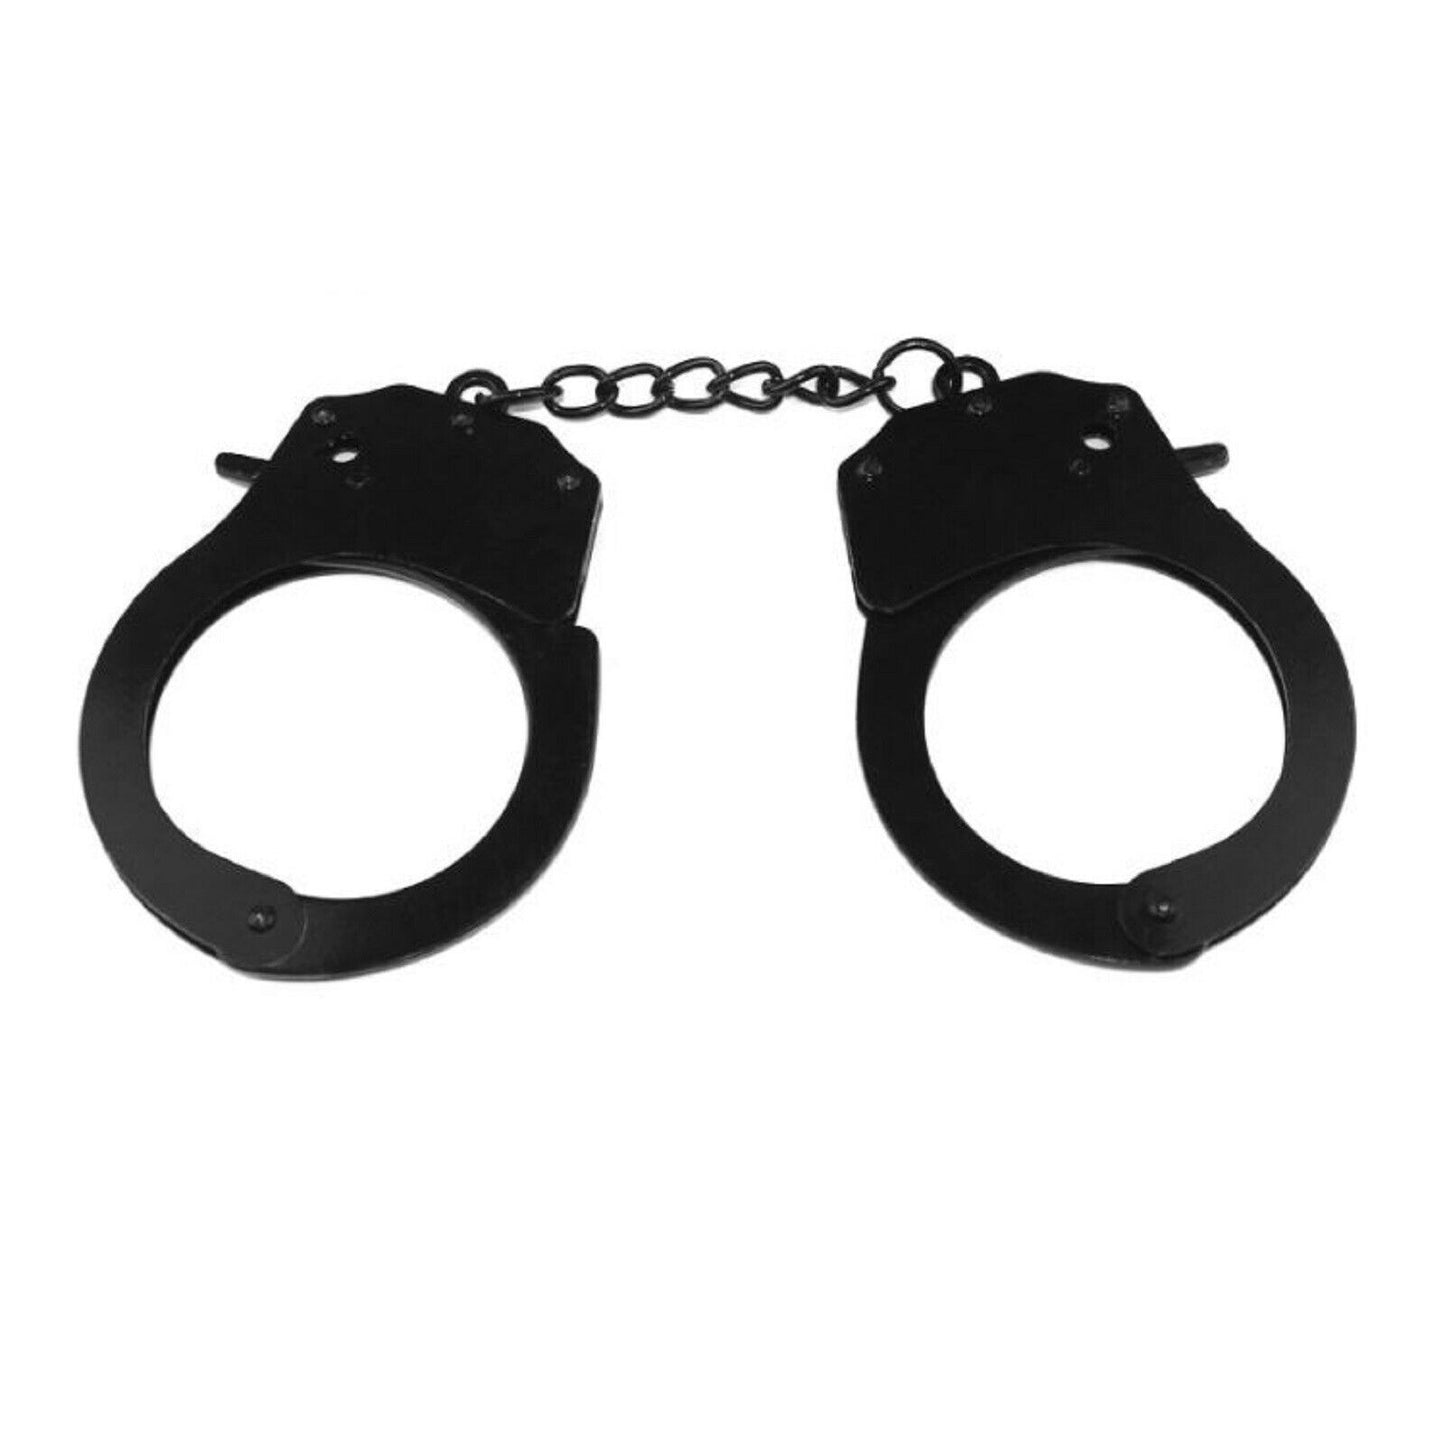 Metal Handcuffs Bondage BDSM Hand Cuffs Sex Toy Fetish Couples Restraint Steel